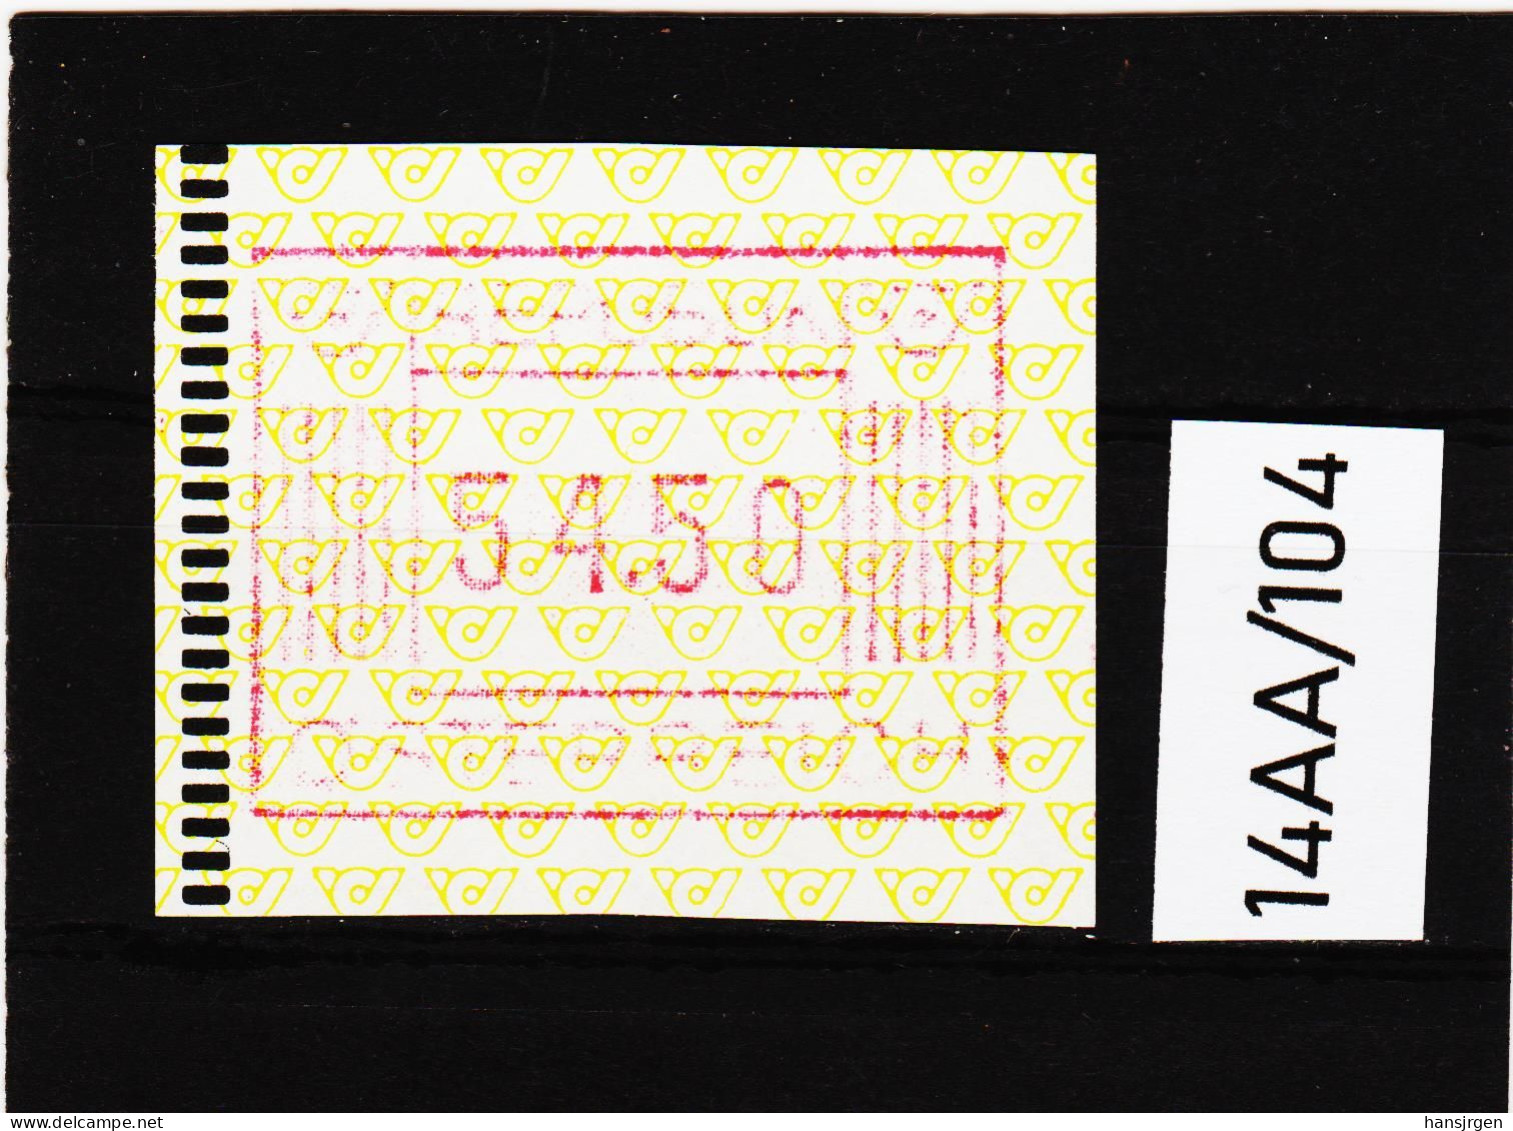 14AA/104  ÖSTERREICH 1983 AUTOMATENMARKEN 1. AUSGABE  54,50 SCHILLING   ** Postfrisch - Timbres De Distributeurs [ATM]